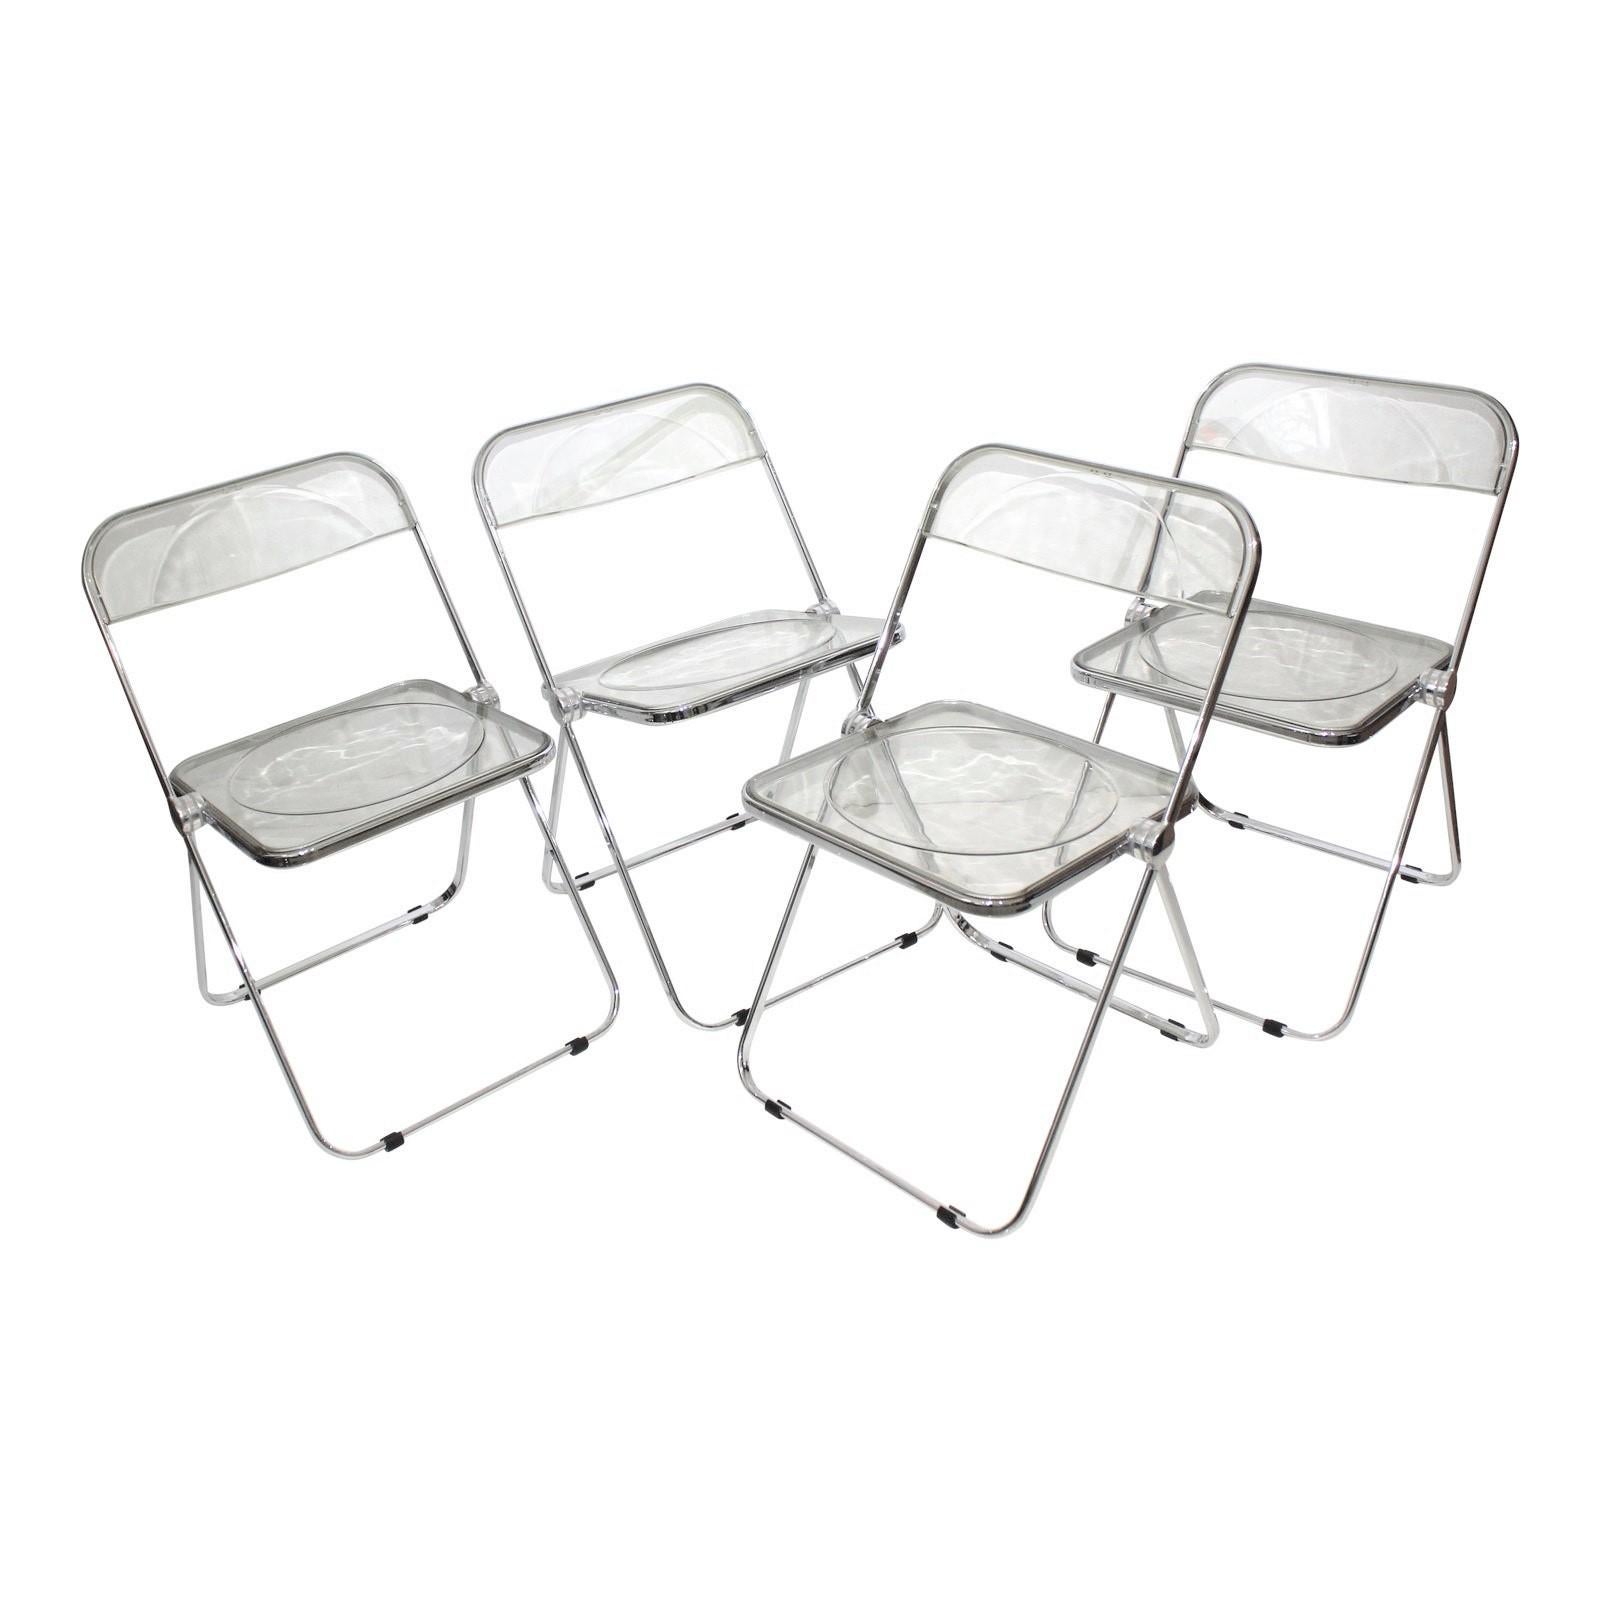 Castelli Plia Folding Chairs, a Set of 4